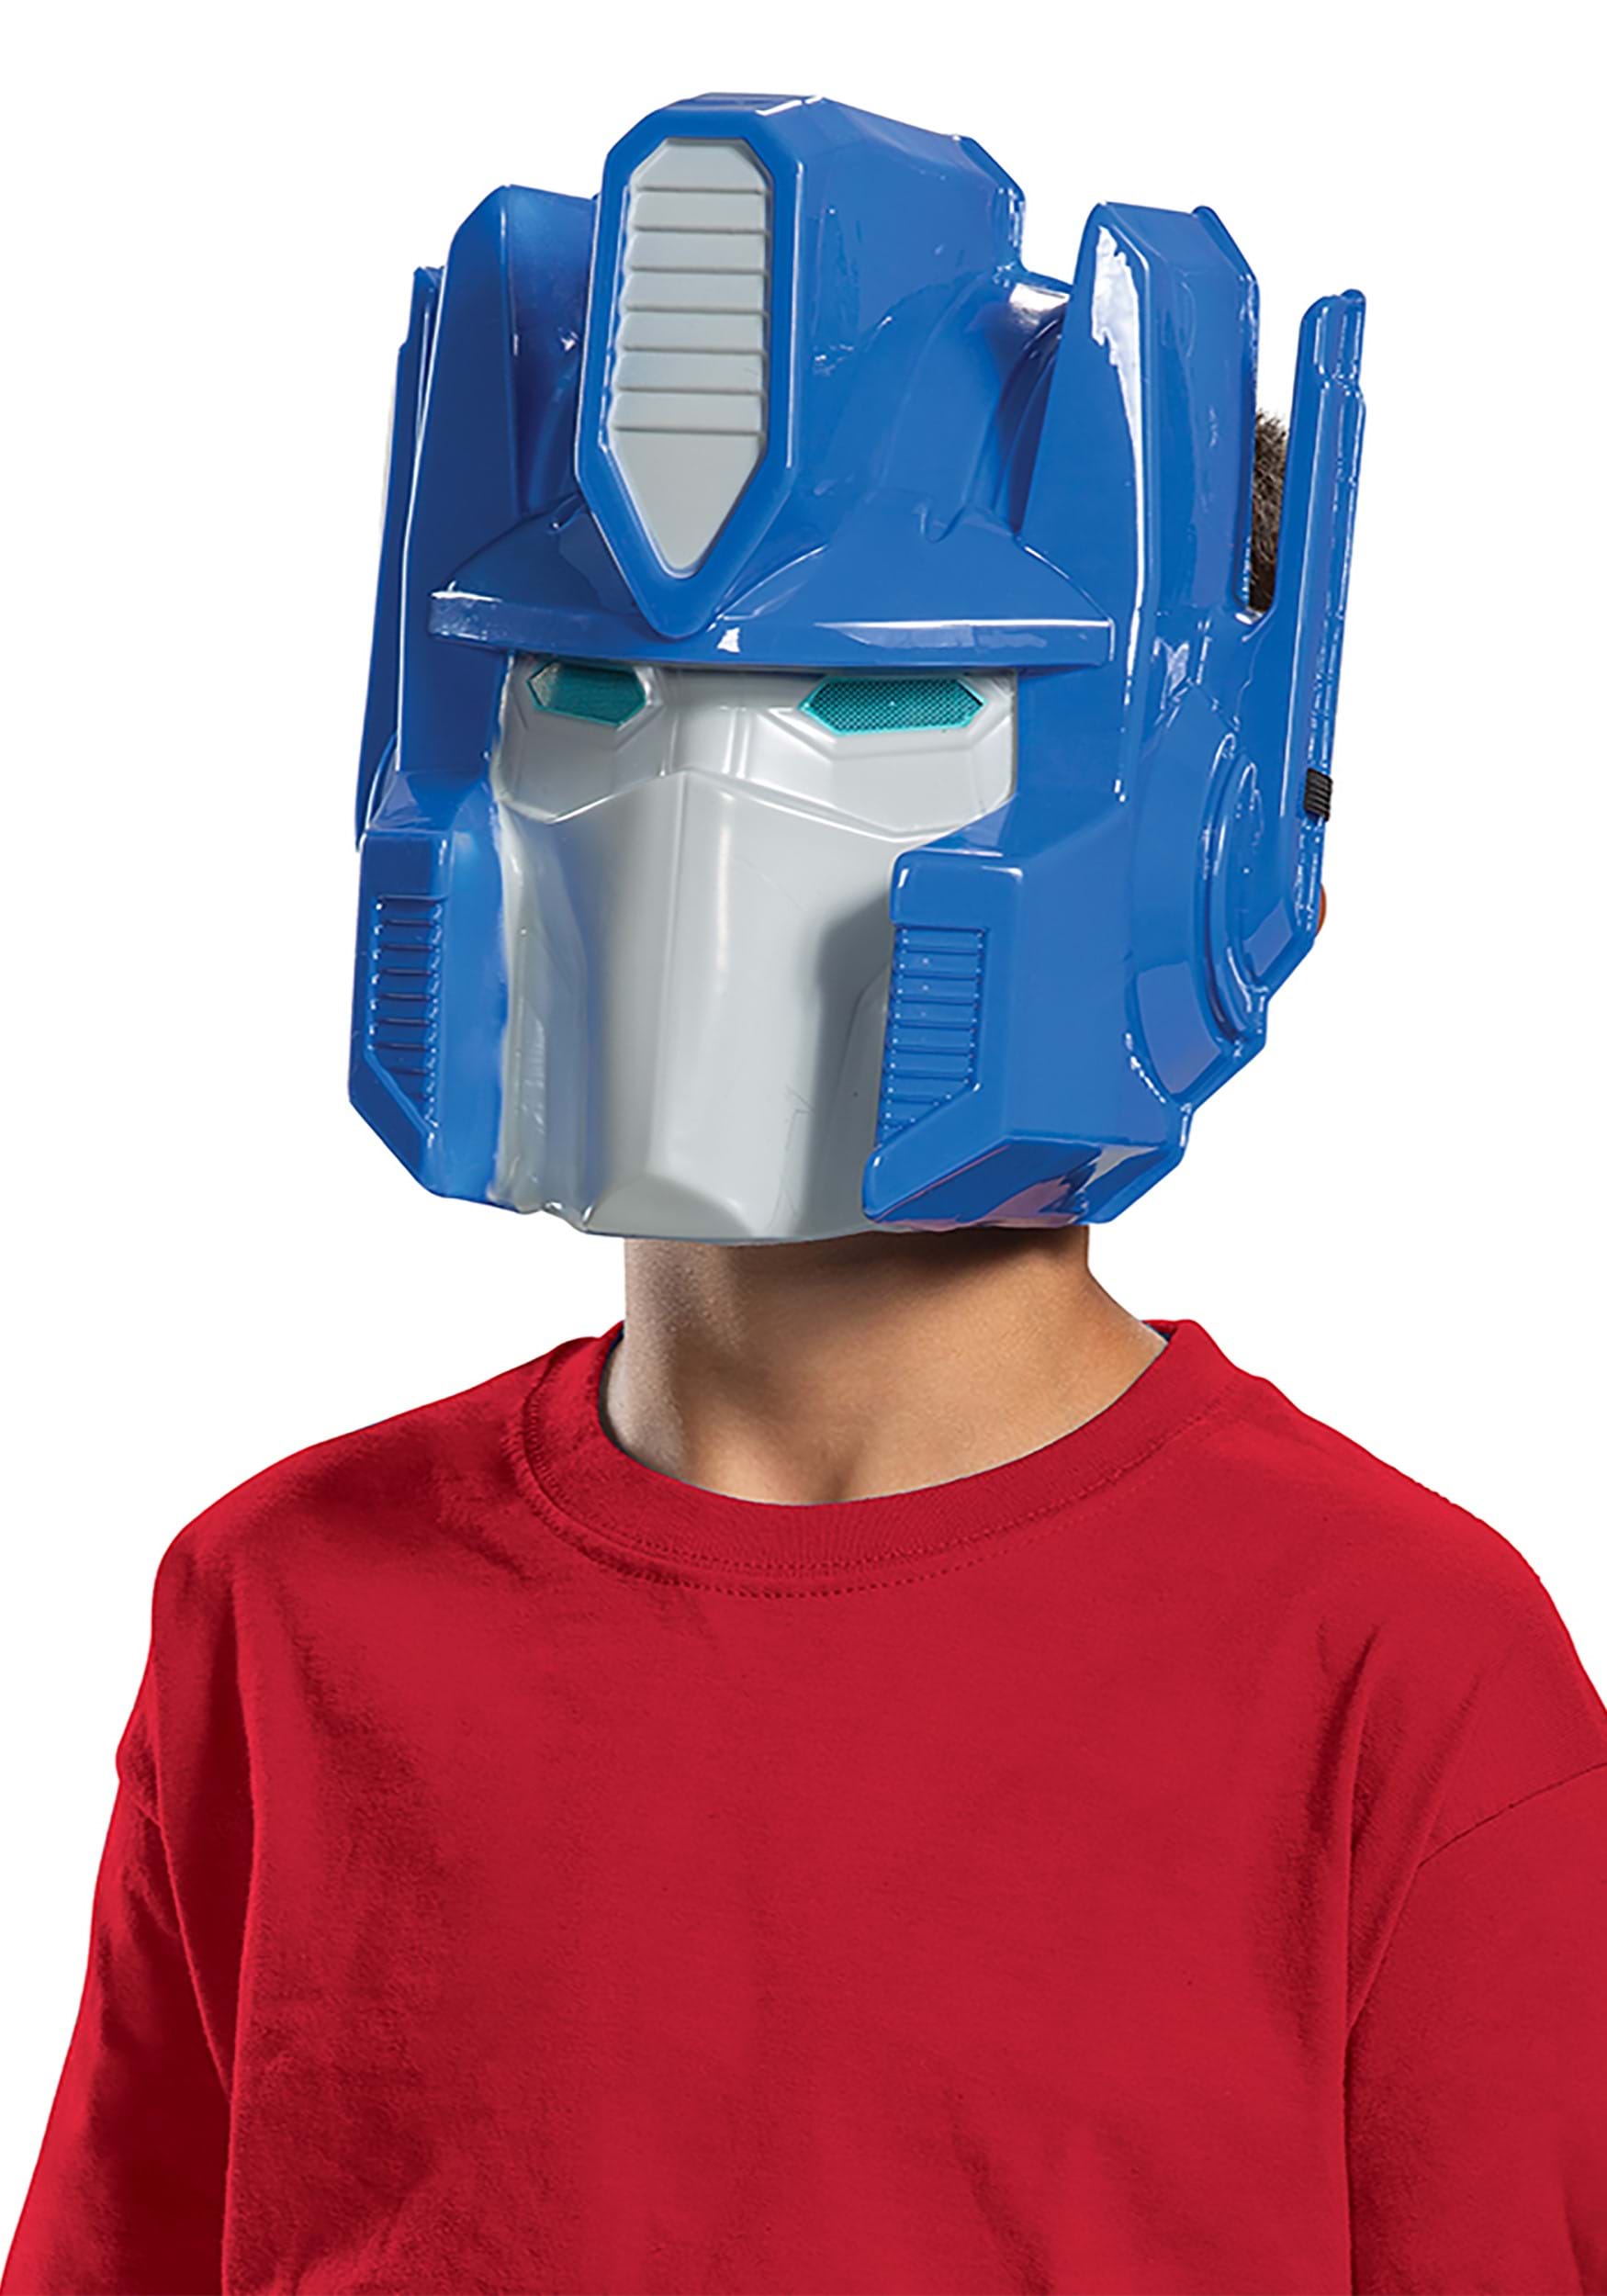 Transformers Optimus Prime Mask For Kids